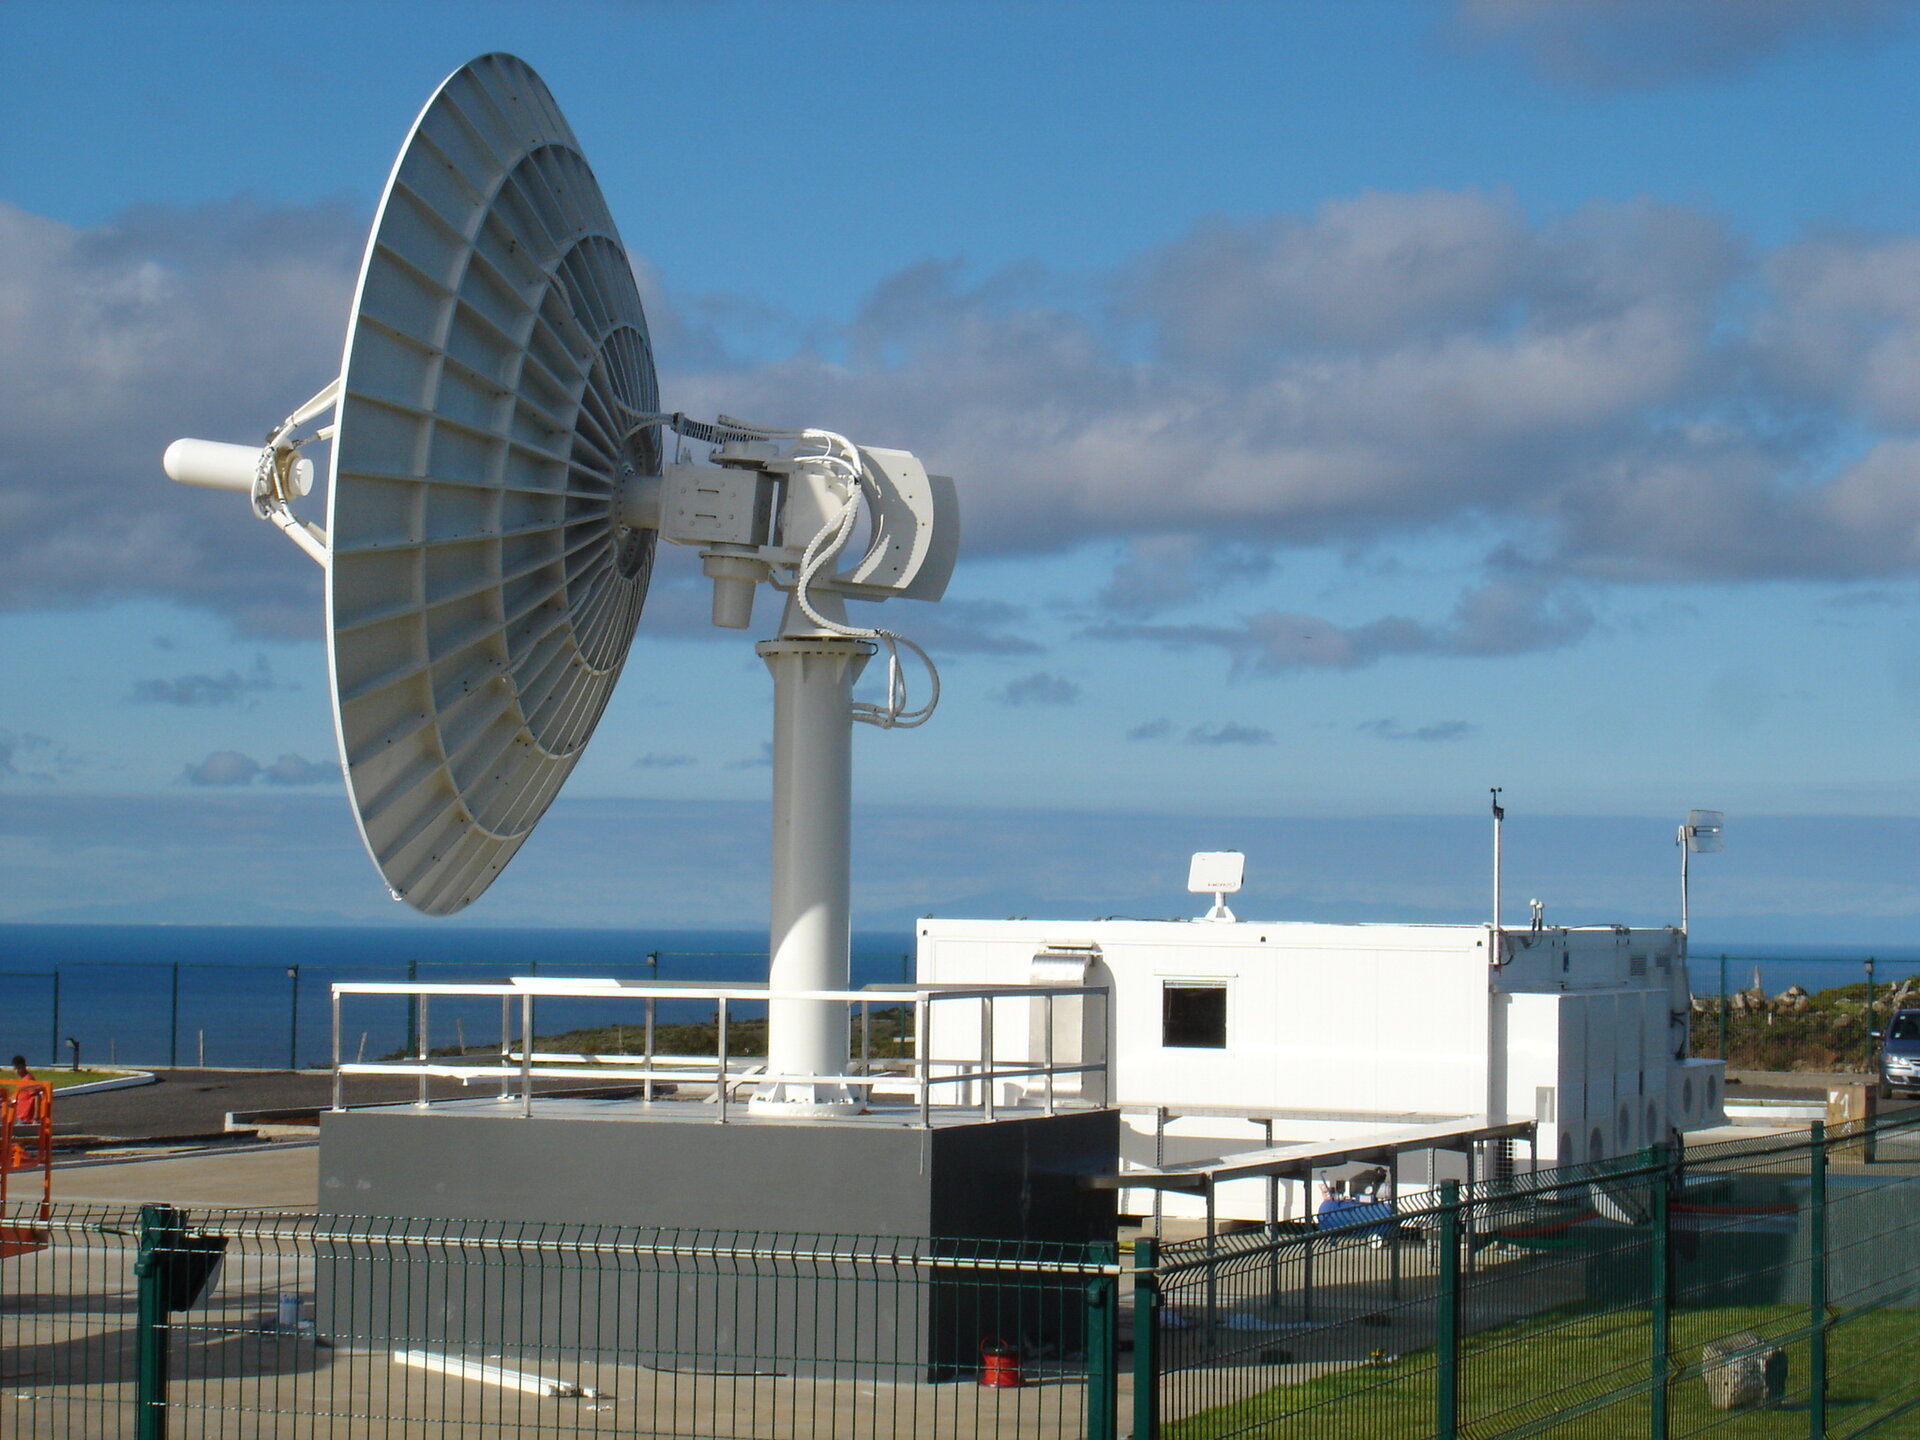 Santa Maria station - 5.5m antenna